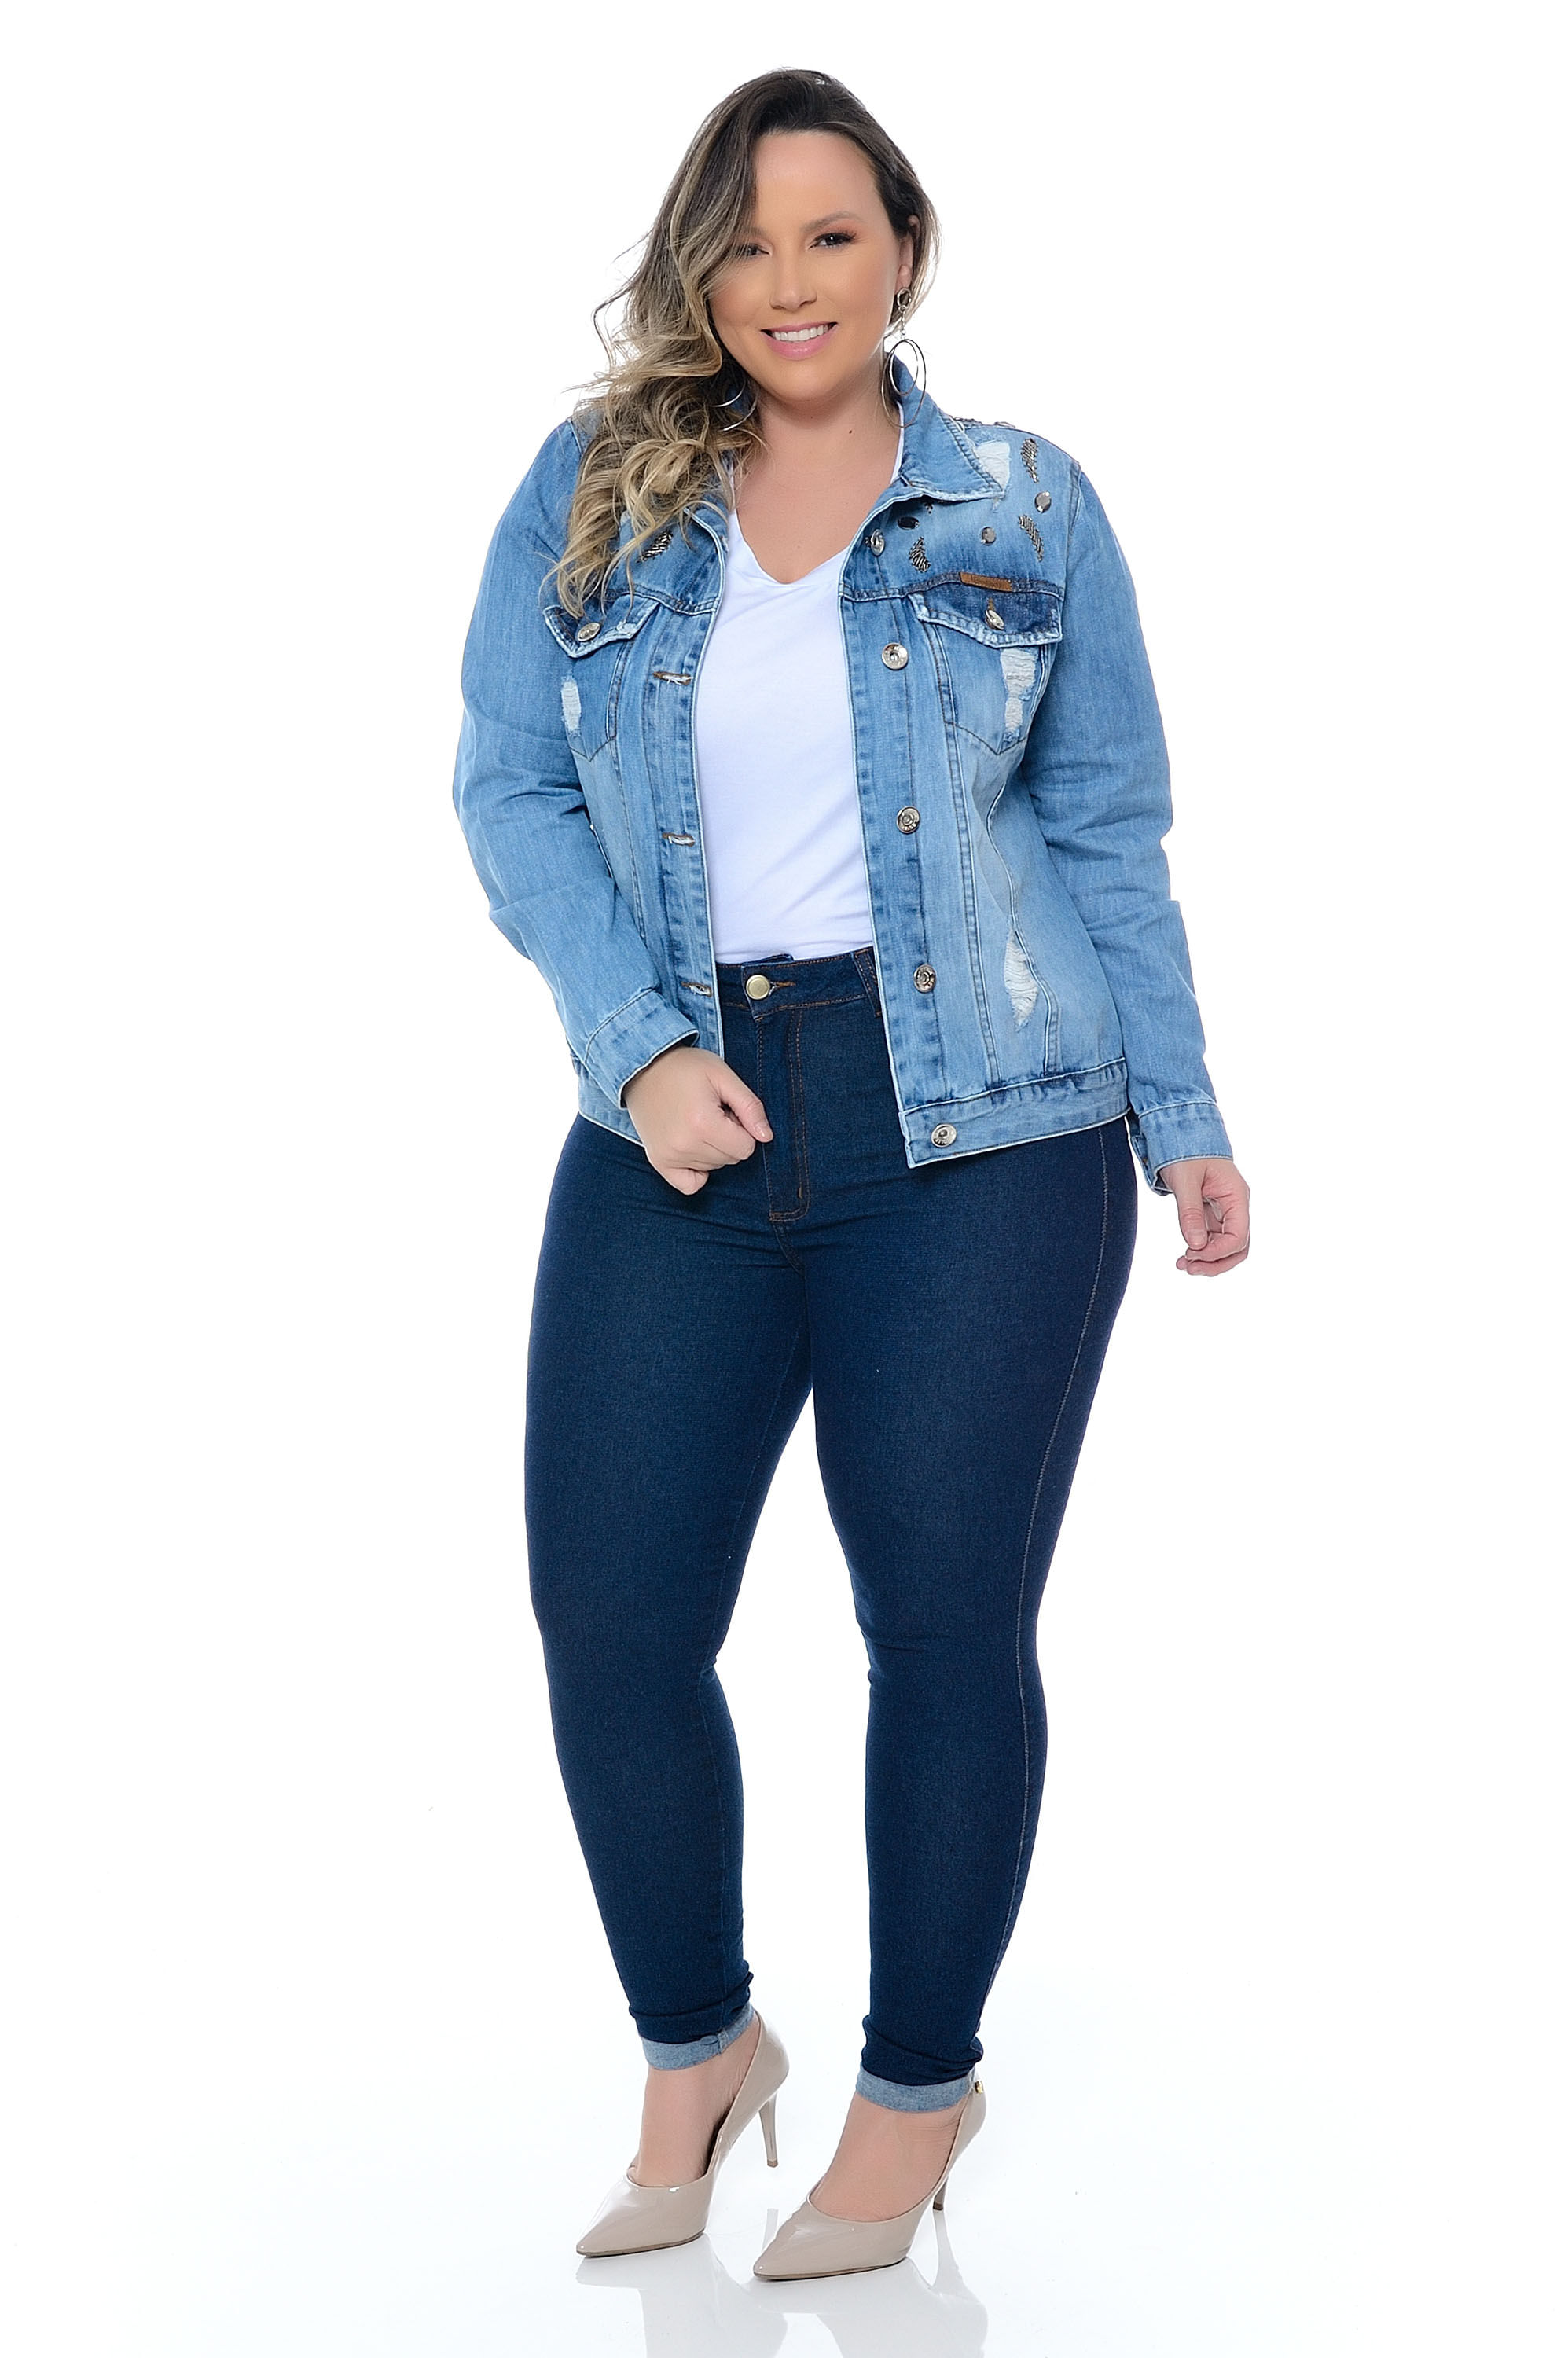 jaqueta jeans exercito feminina